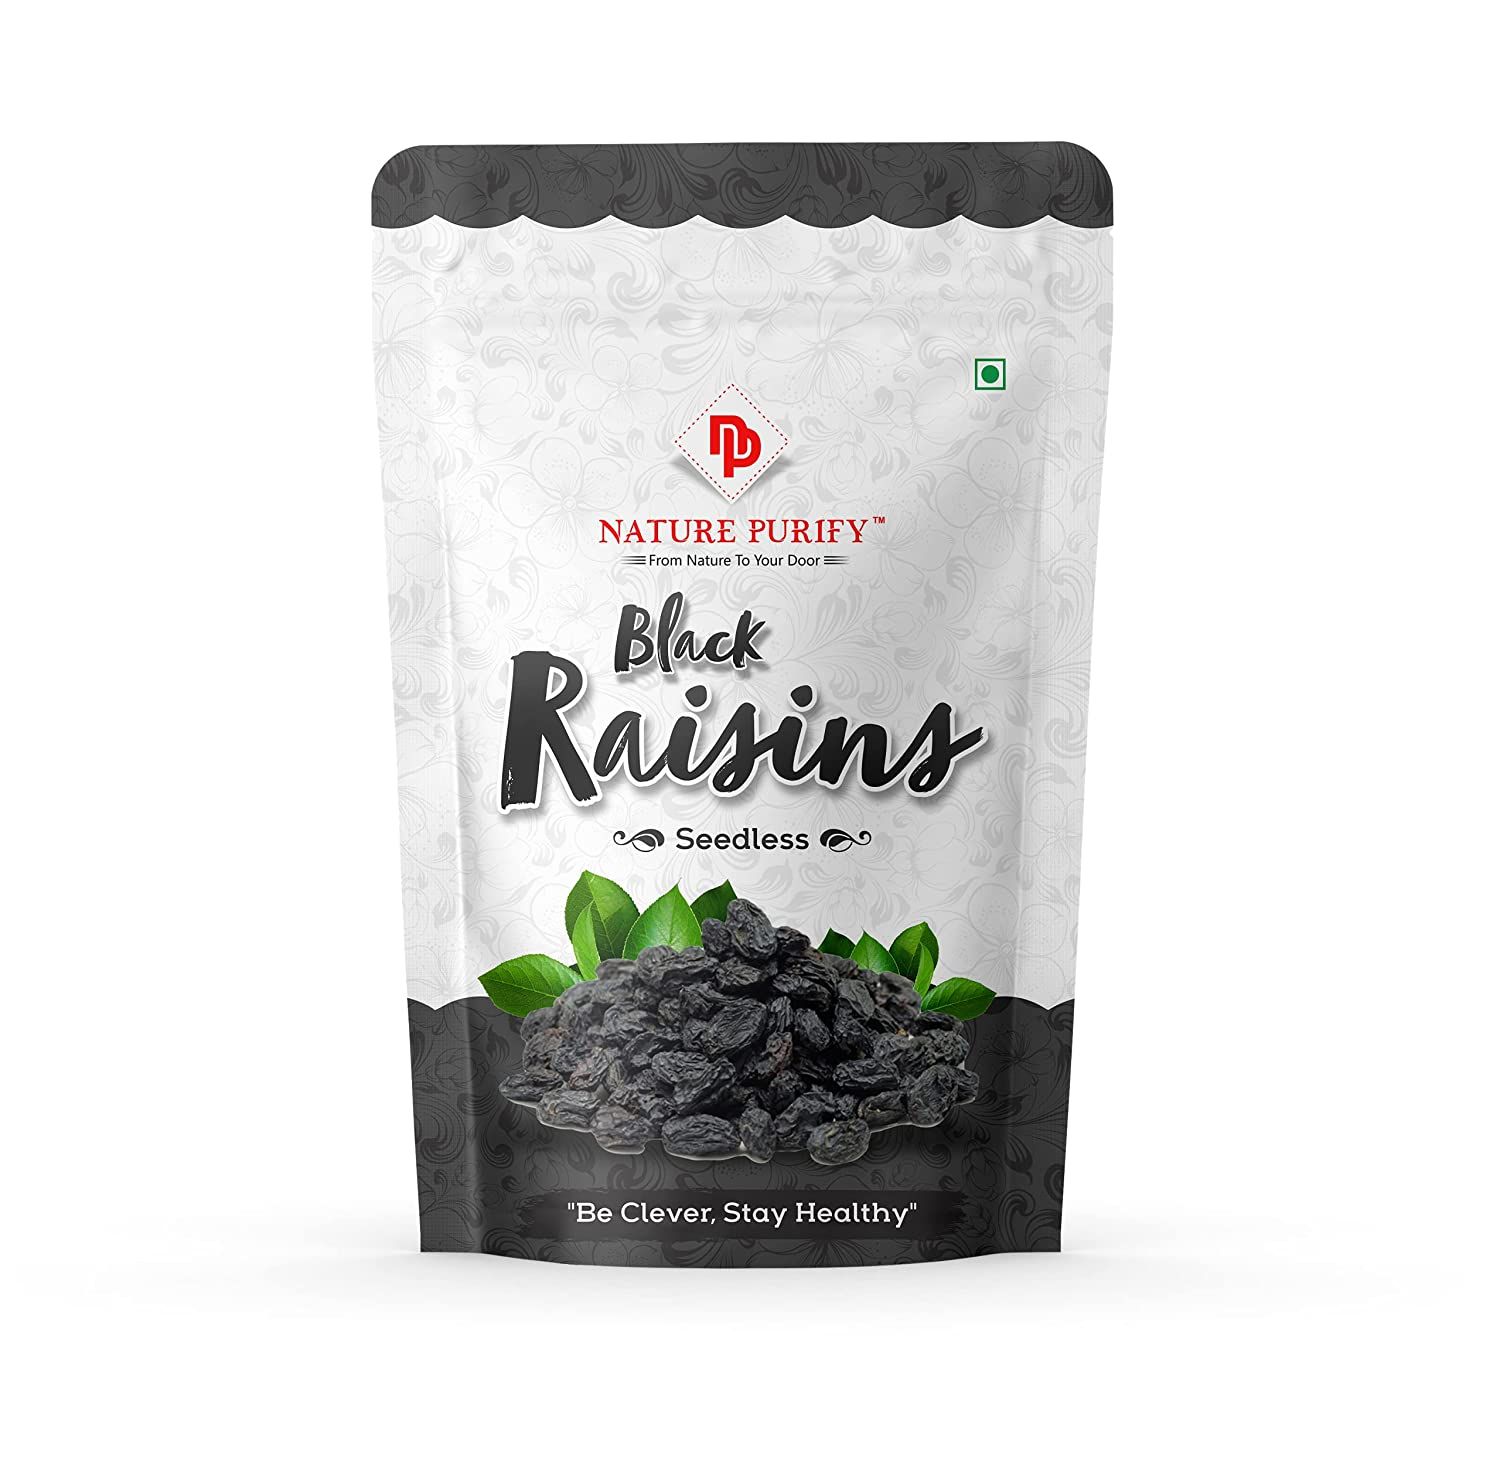 Nature Purify Black Raisins Seedless Image